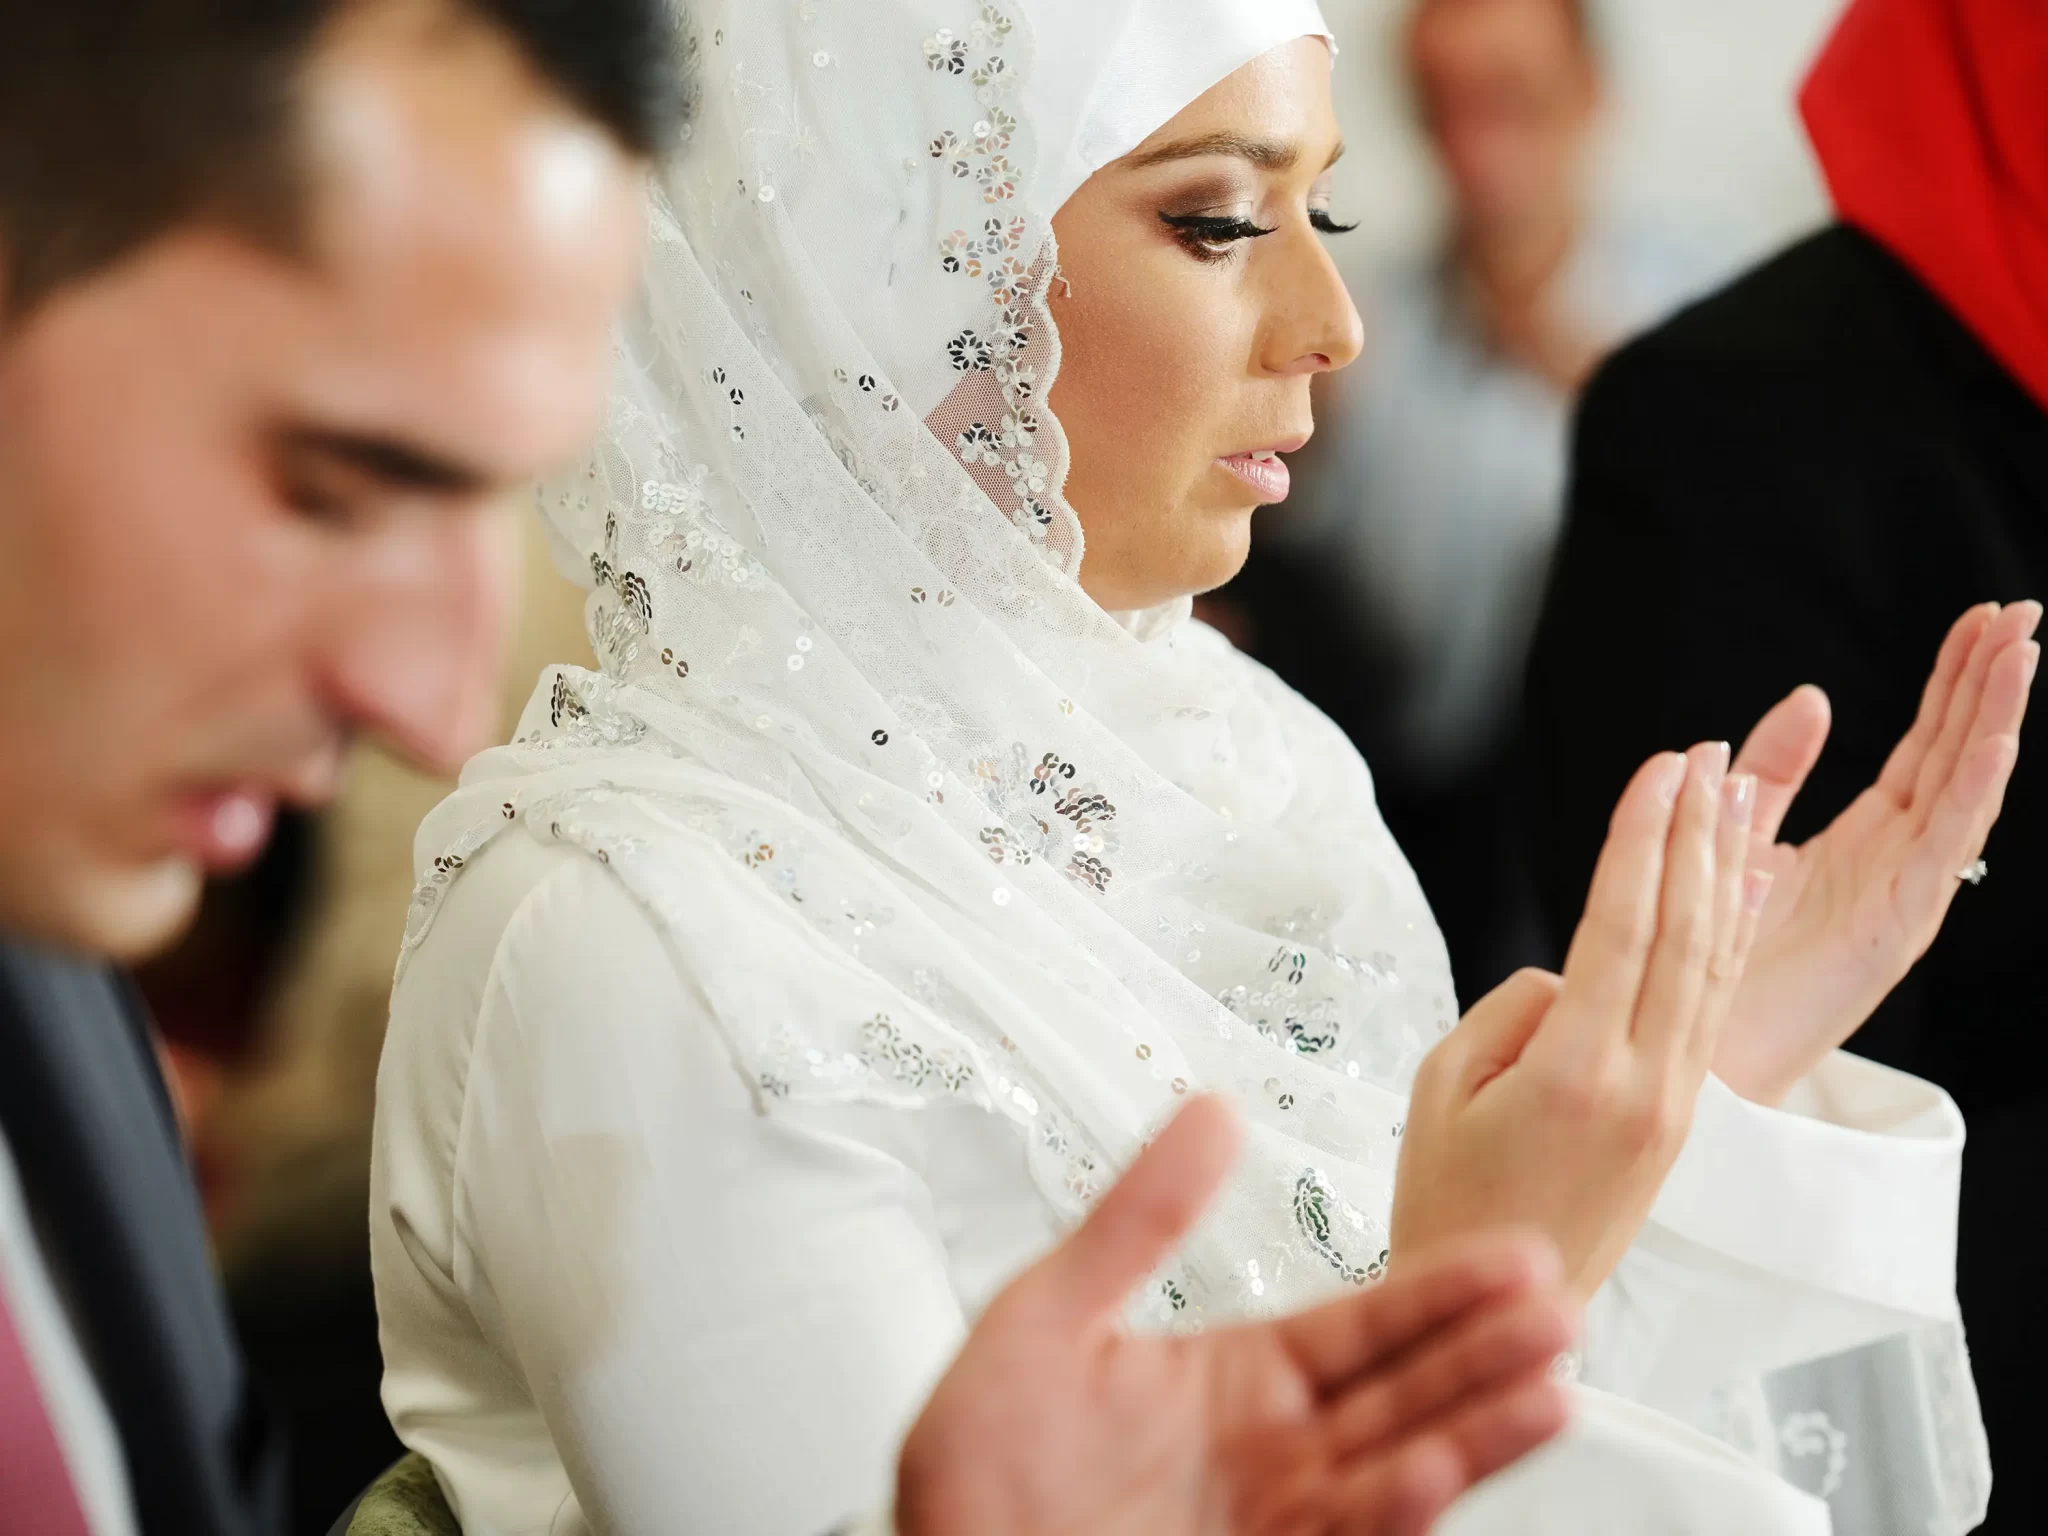 После никях. Имам Никях. Свадьба мусульман. Свадьба в Исламе. Свадьба в мечети у мусульман.